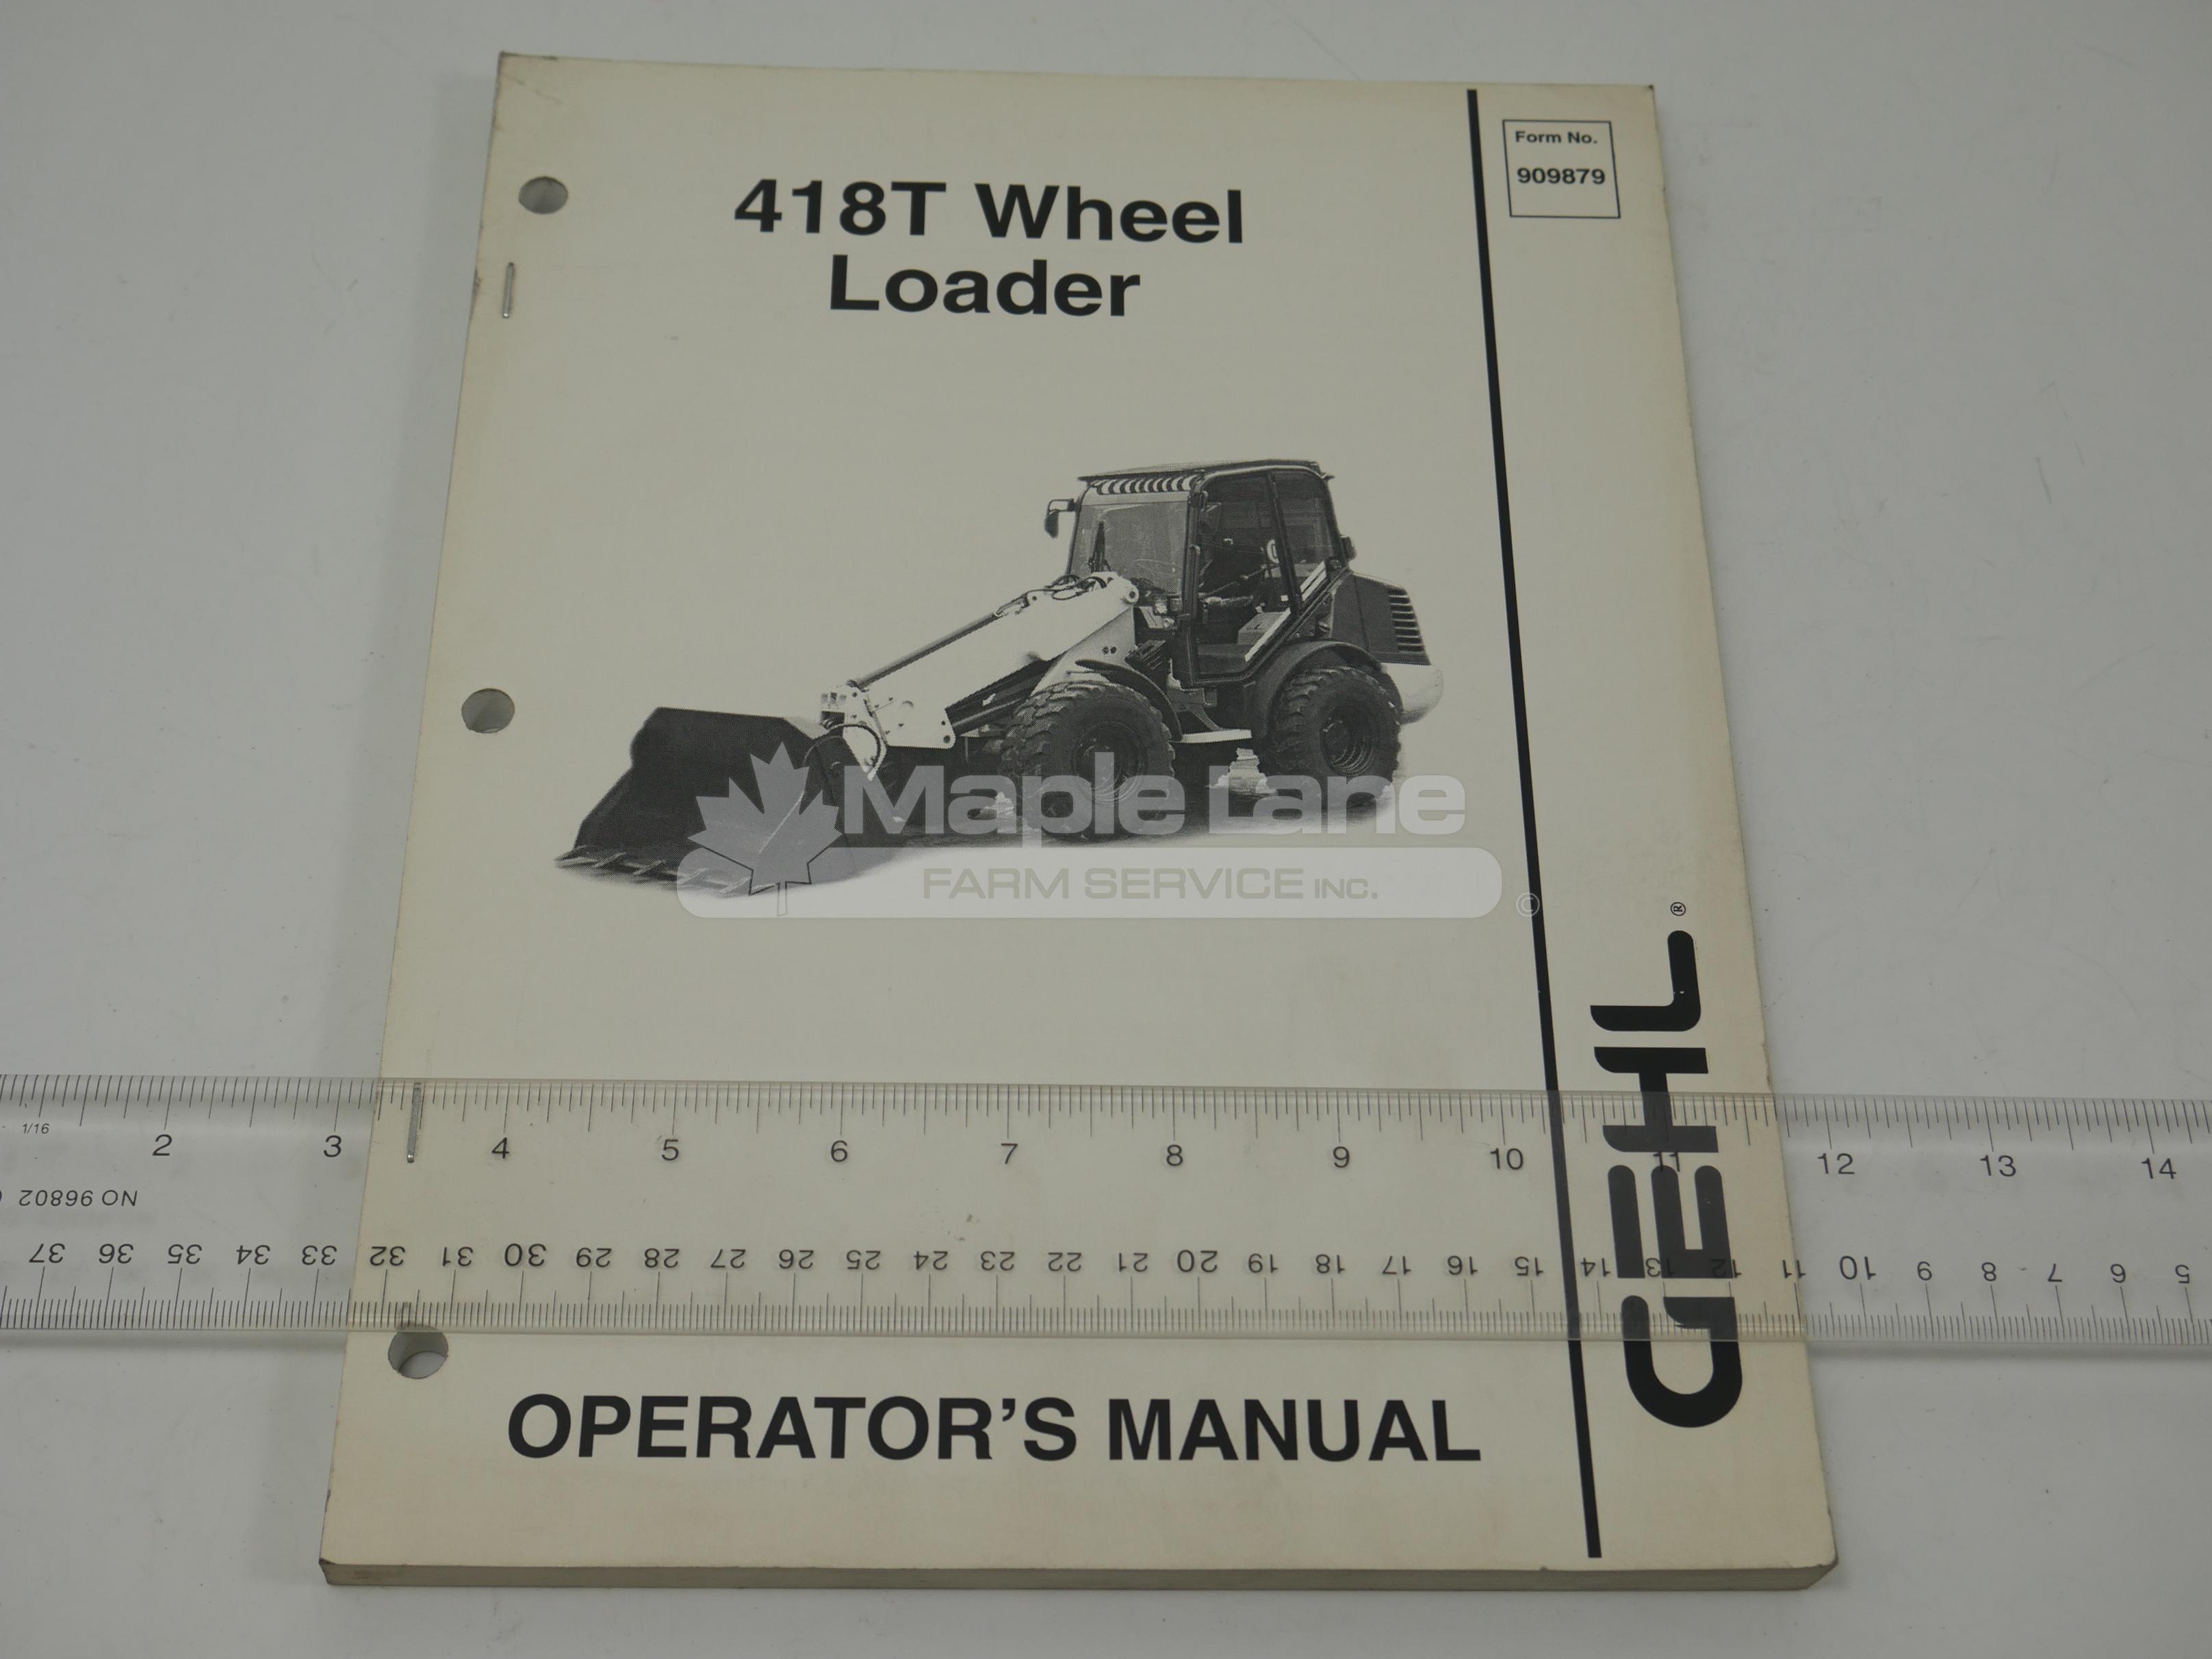 909879 Operator Manual